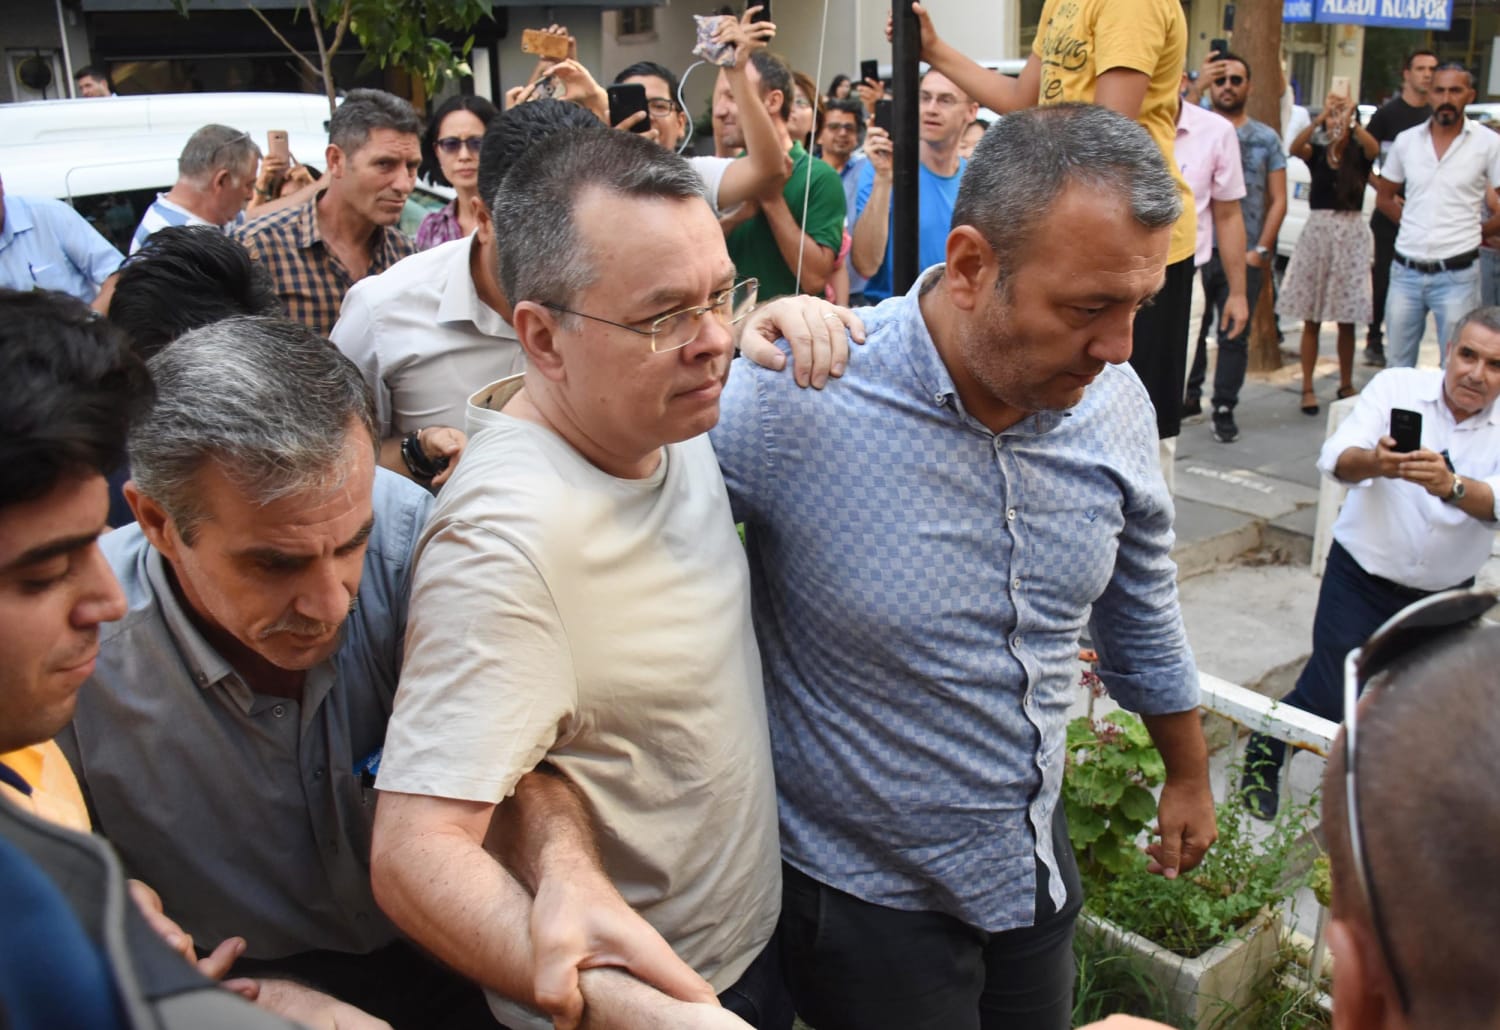 U.S. pastor Andrew Brunson released from prison in Turkey, under house arrest